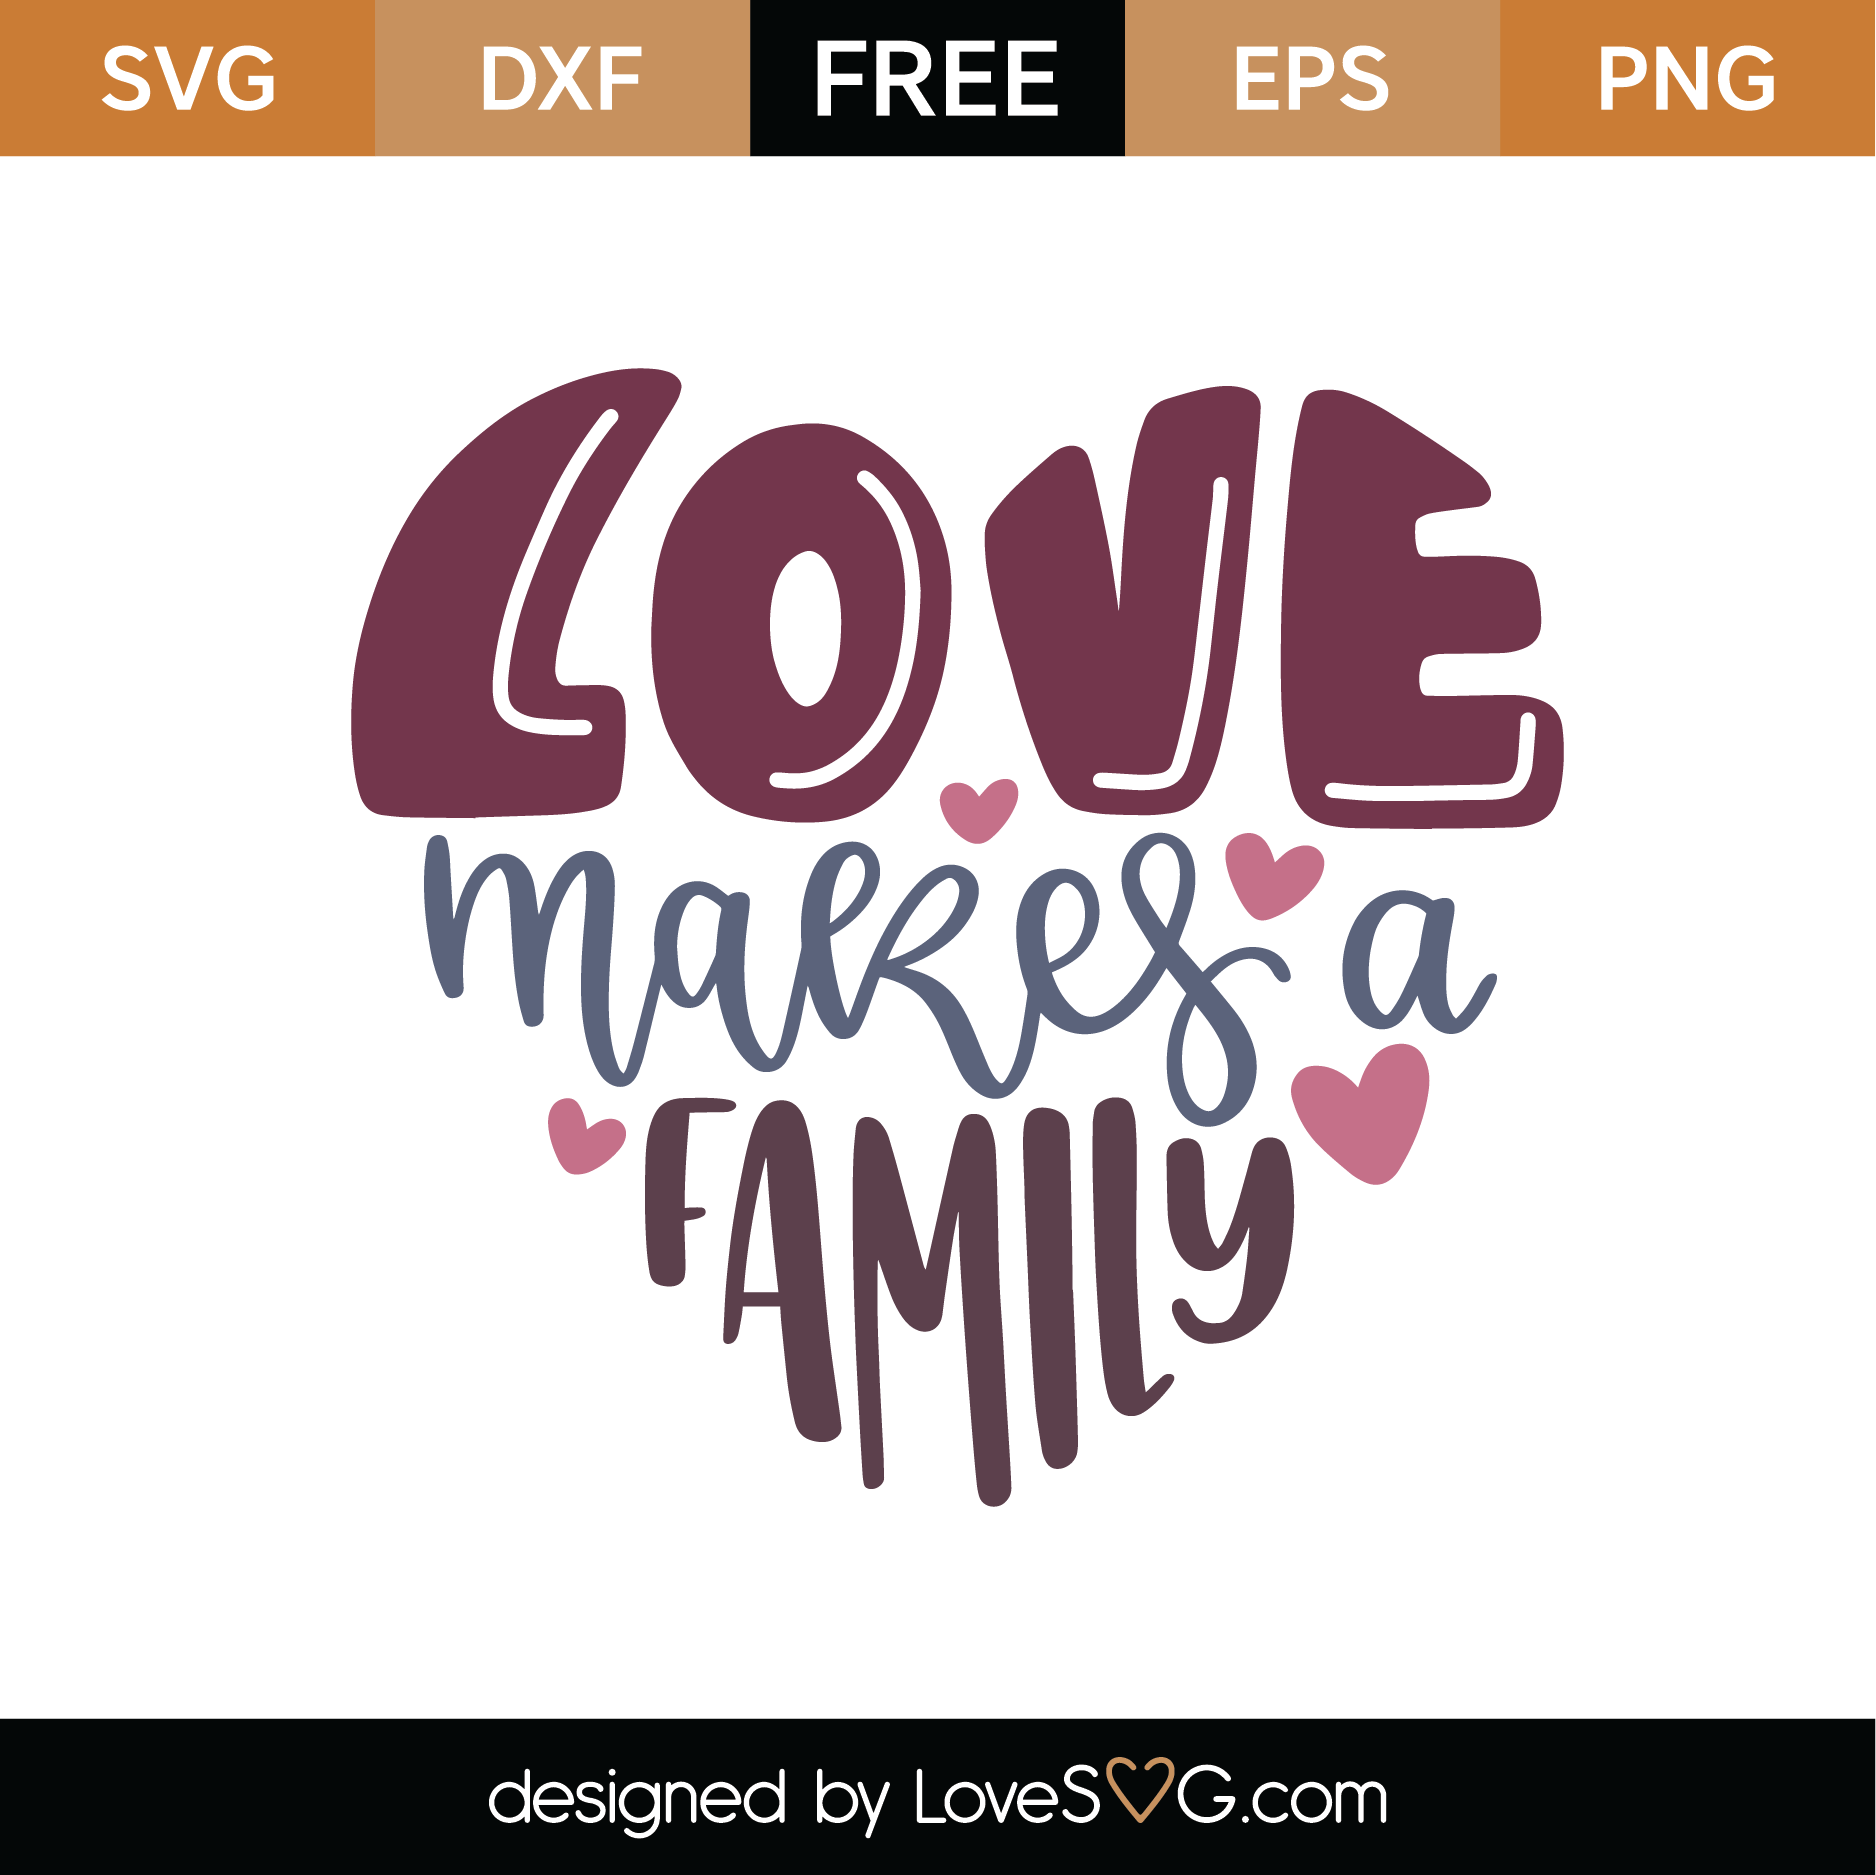 Free Love Makes A Family SVG Cut File | Lovesvg.com